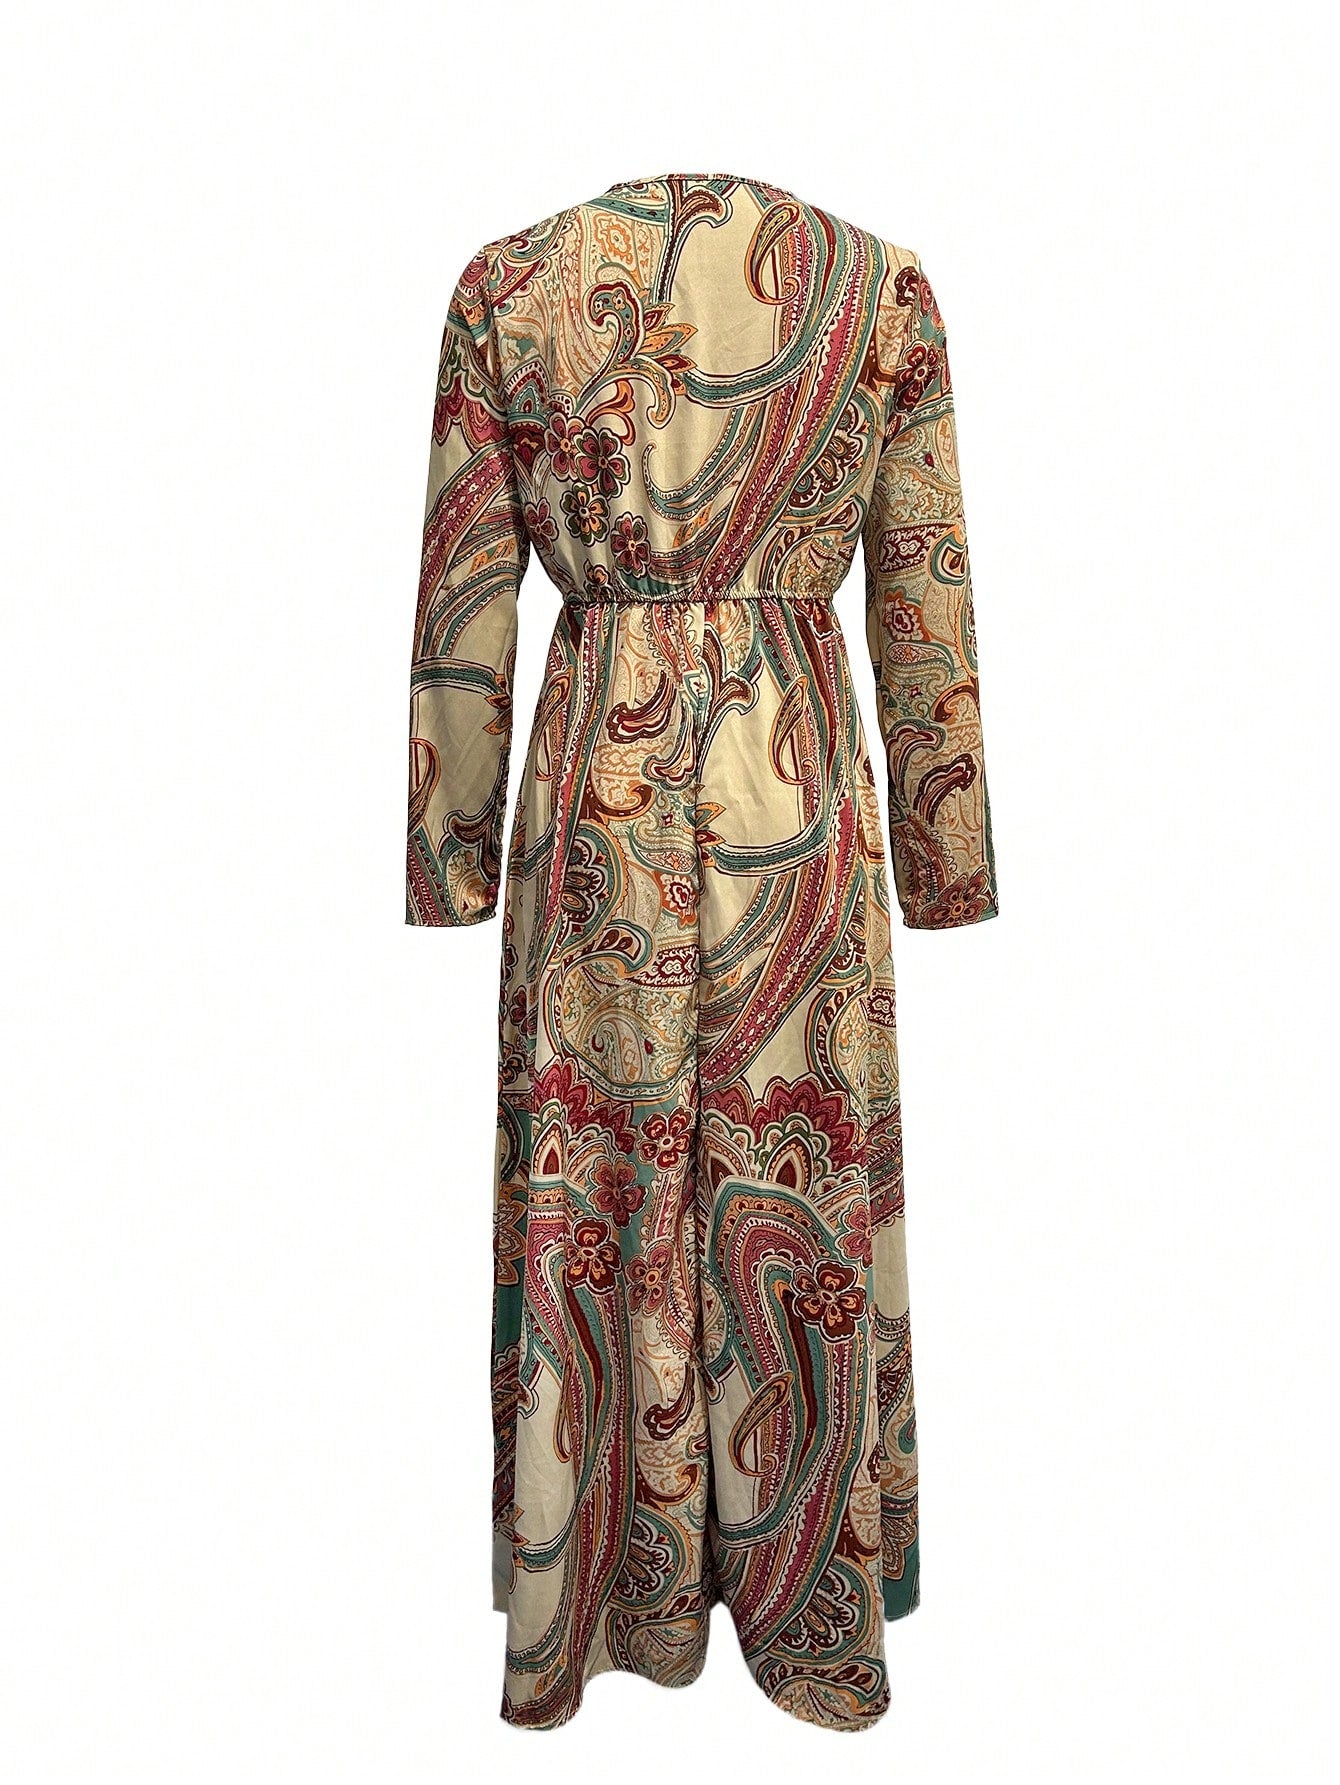 SHEIN LUNE Paisley Pattern Printed Long Sleeve Dress